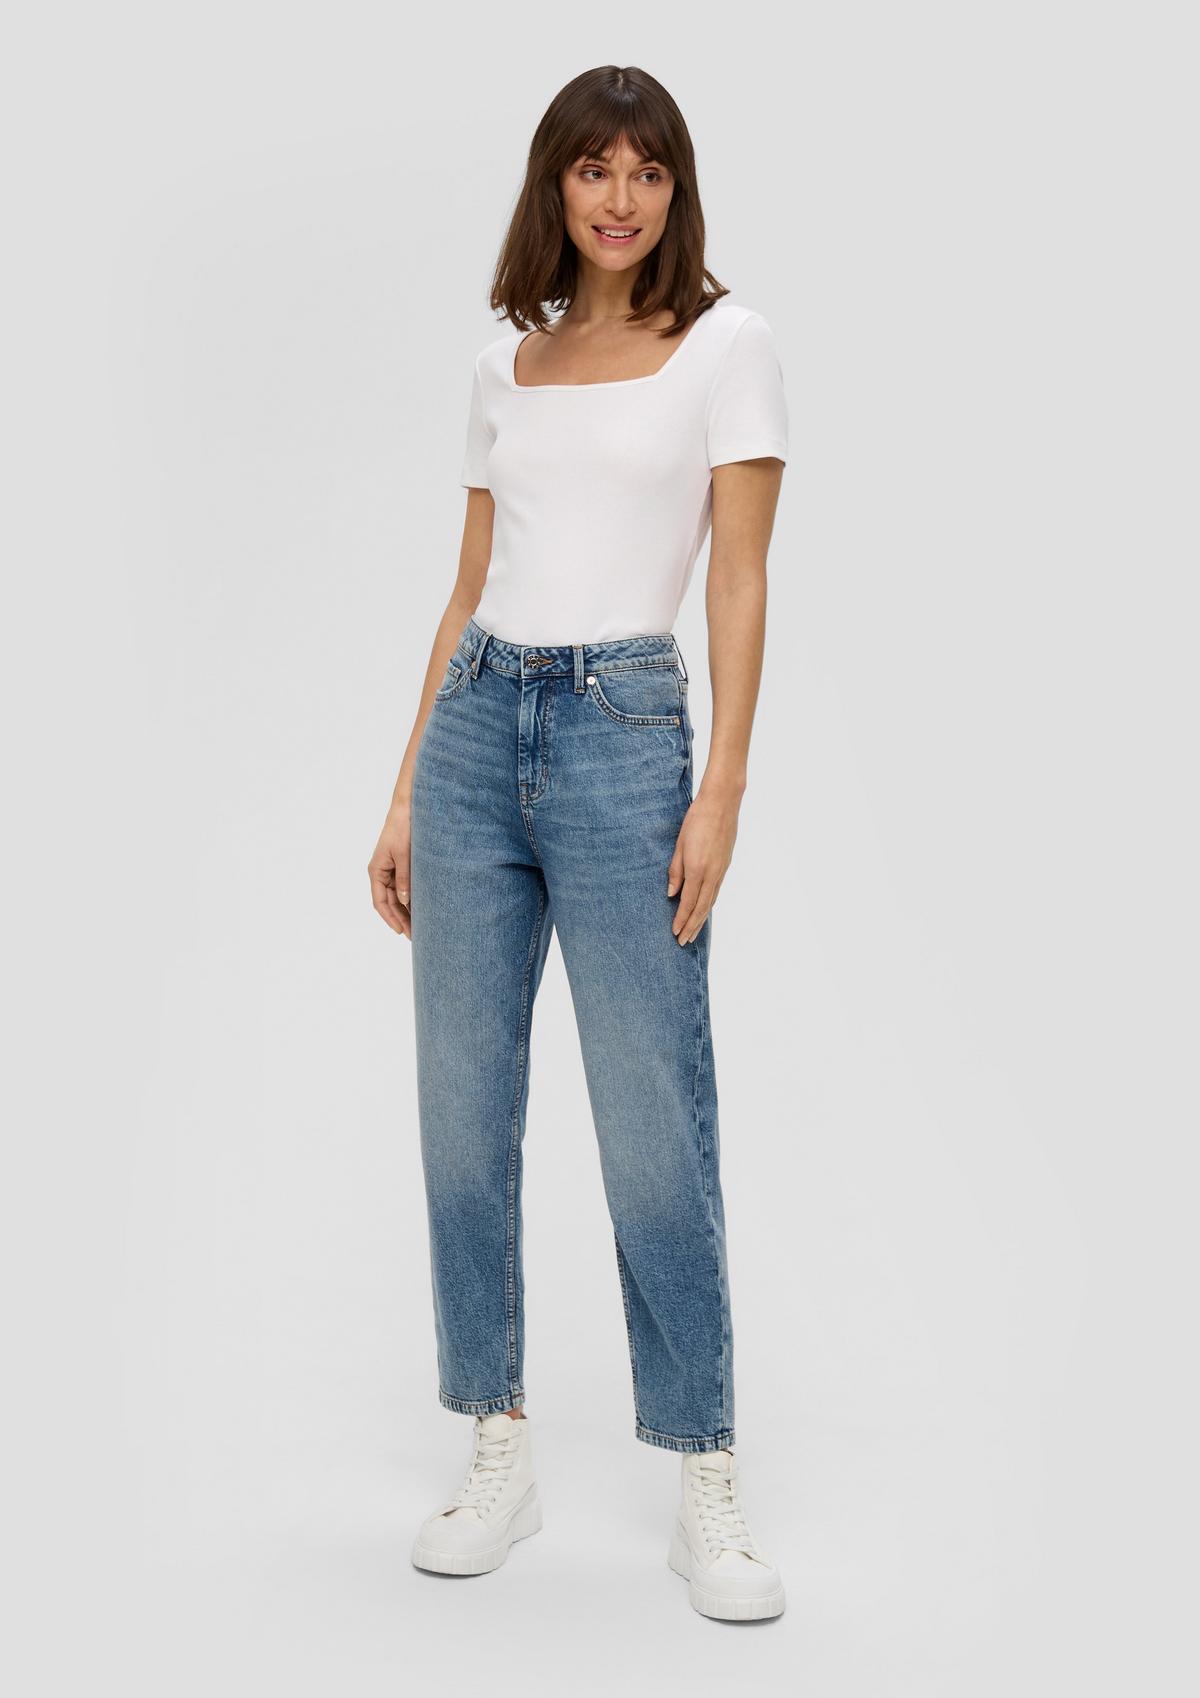 Mom jeans / regular fit / high rise / wide leg